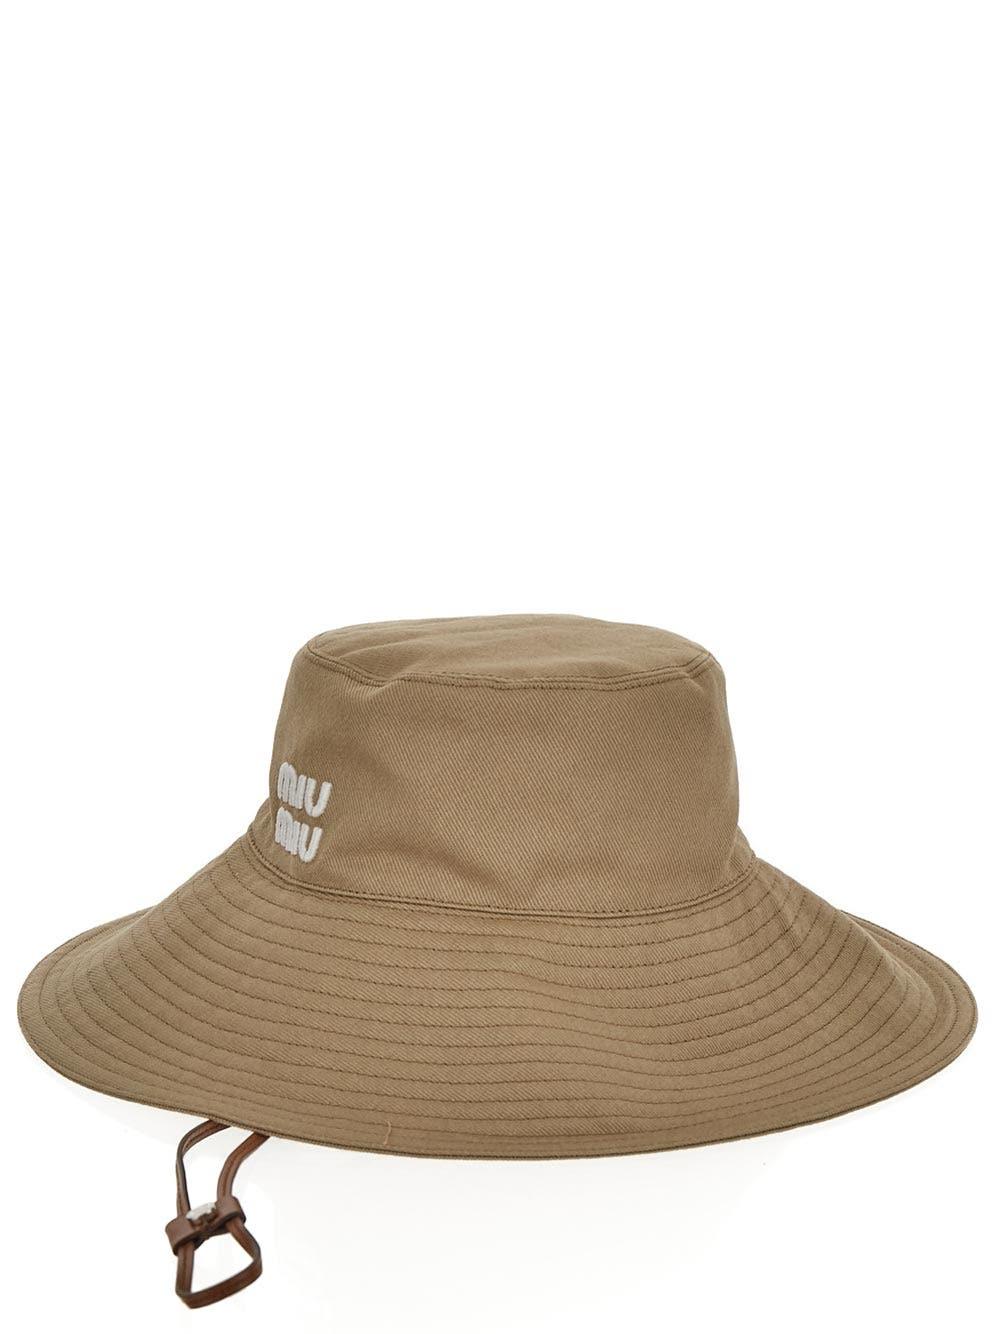 Miu Miu Drill Hat in Natural | Lyst